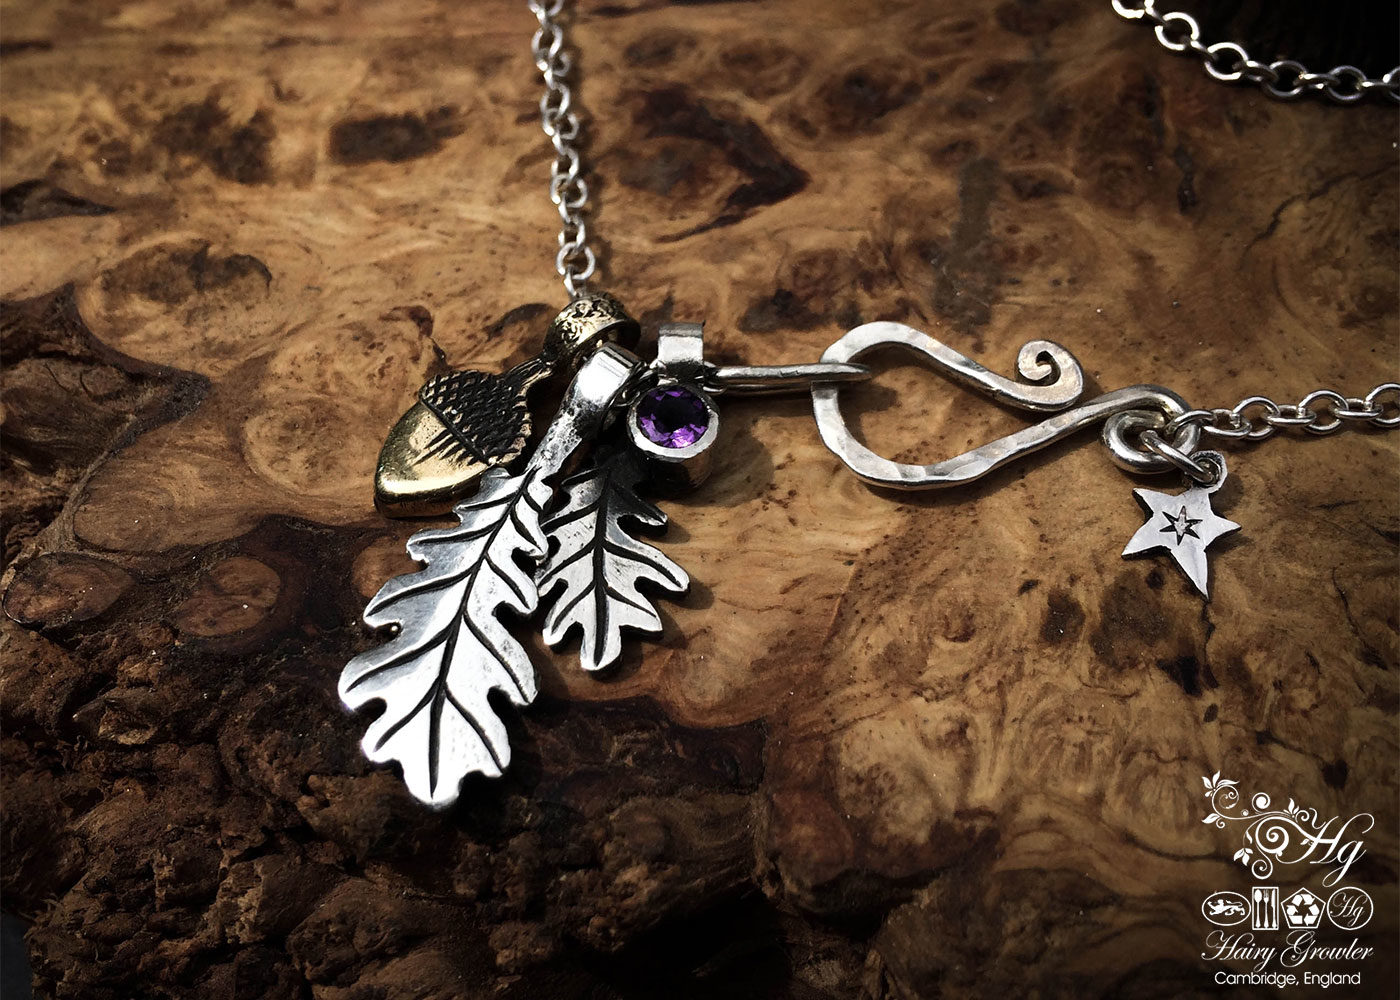 handcrafted silver oak leaf charm for a tree sculpture, necklace or bracelet